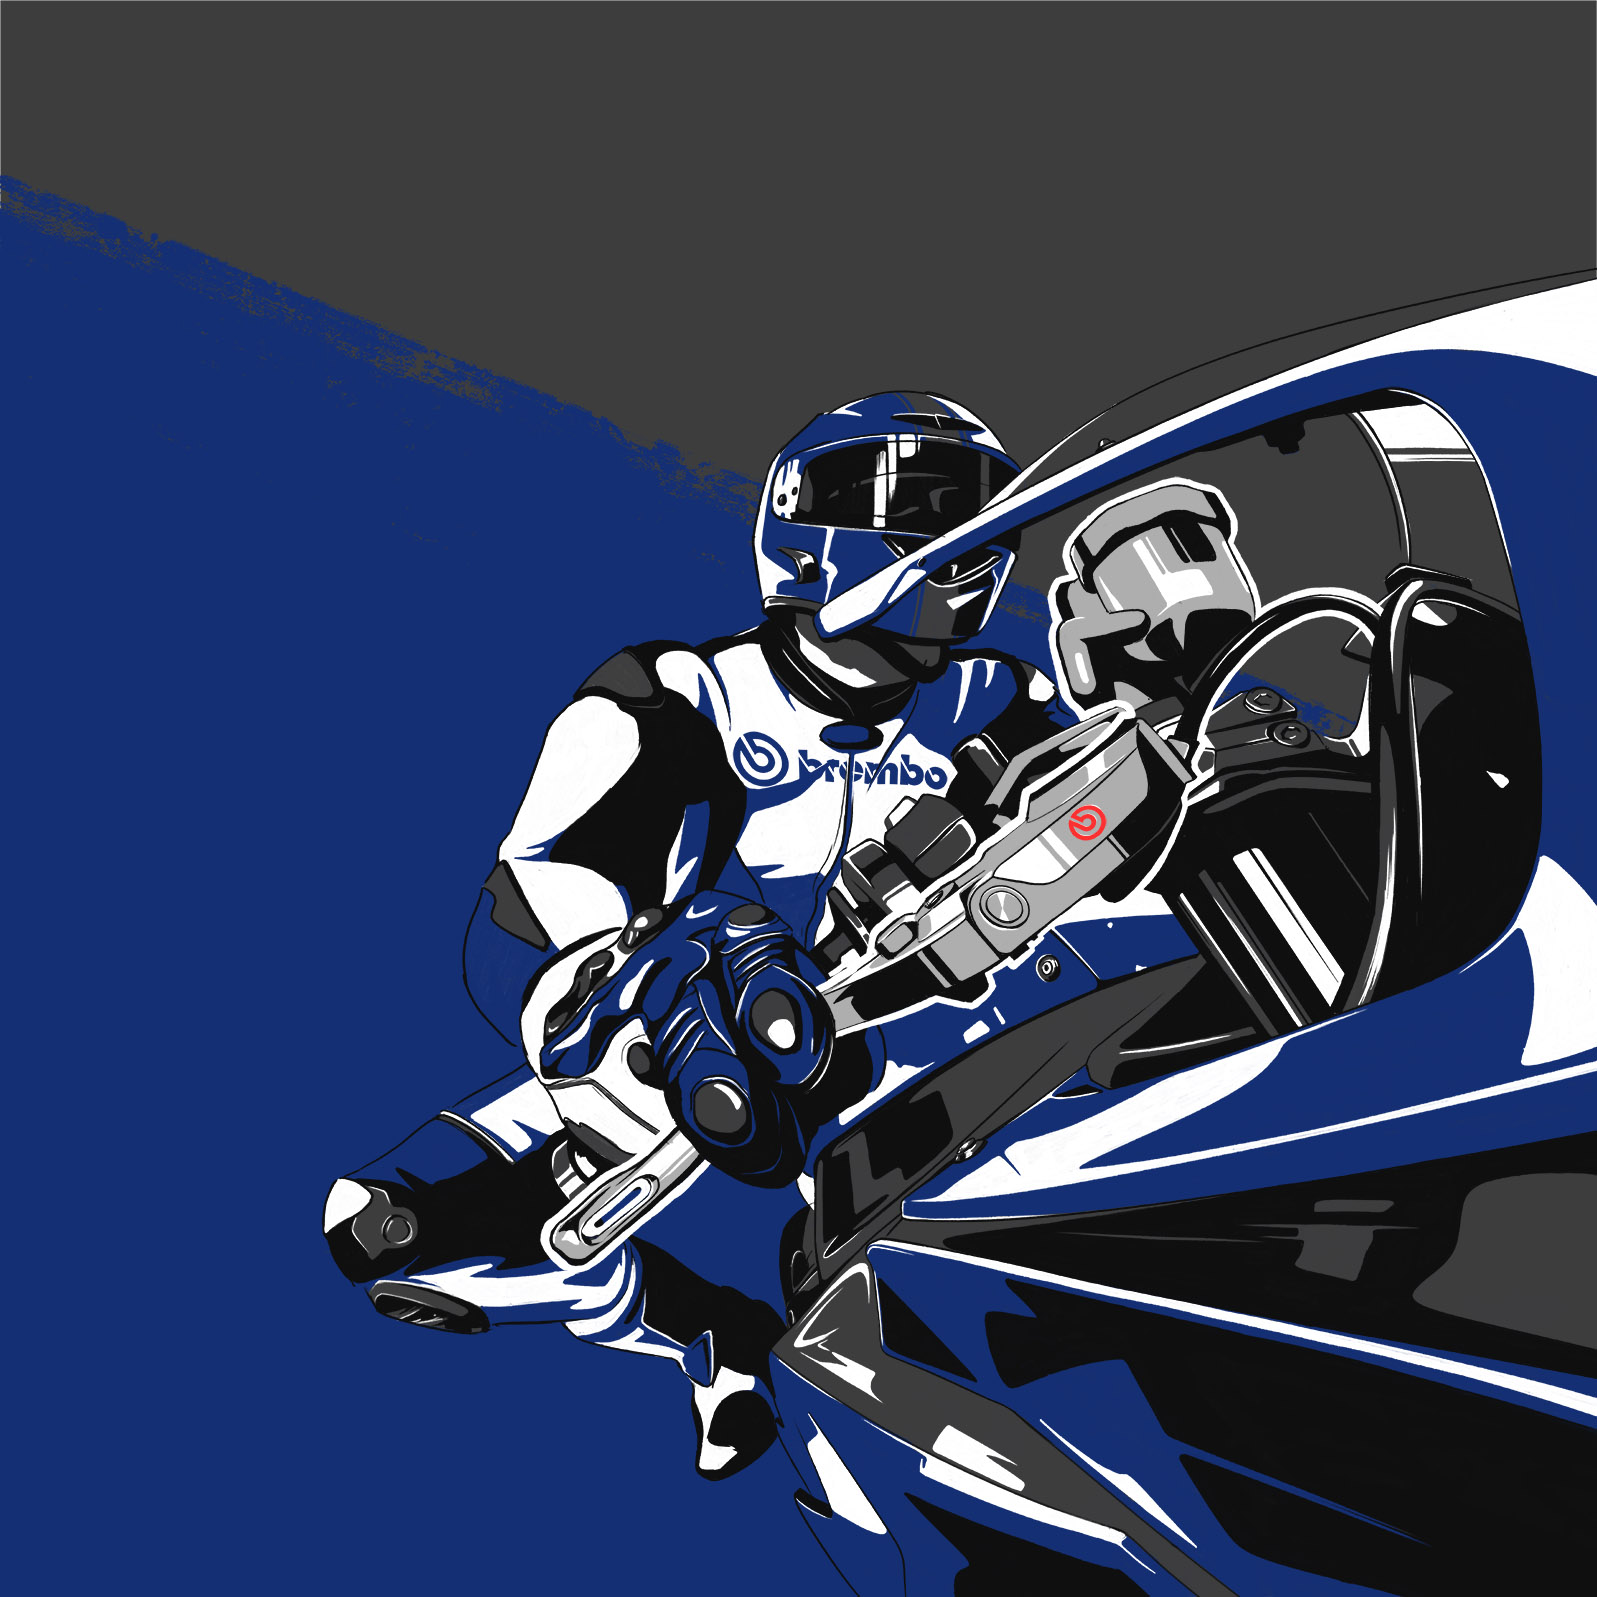 Brembo Moto GP Motorcycle Illustration 1597x1597